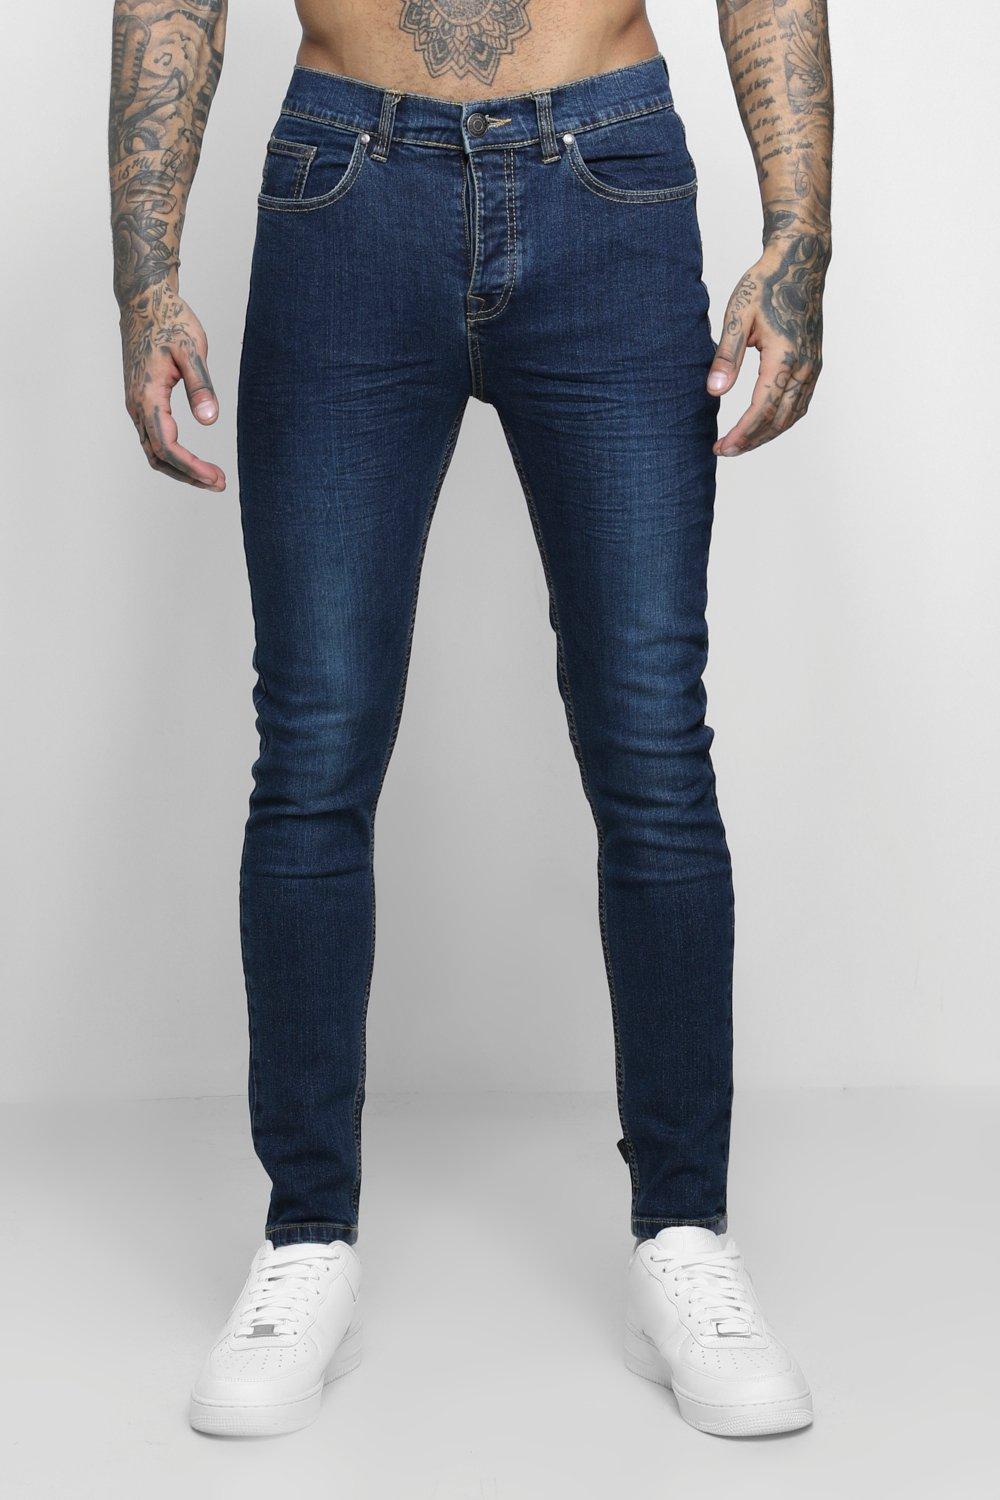 zara blue ripped jeans